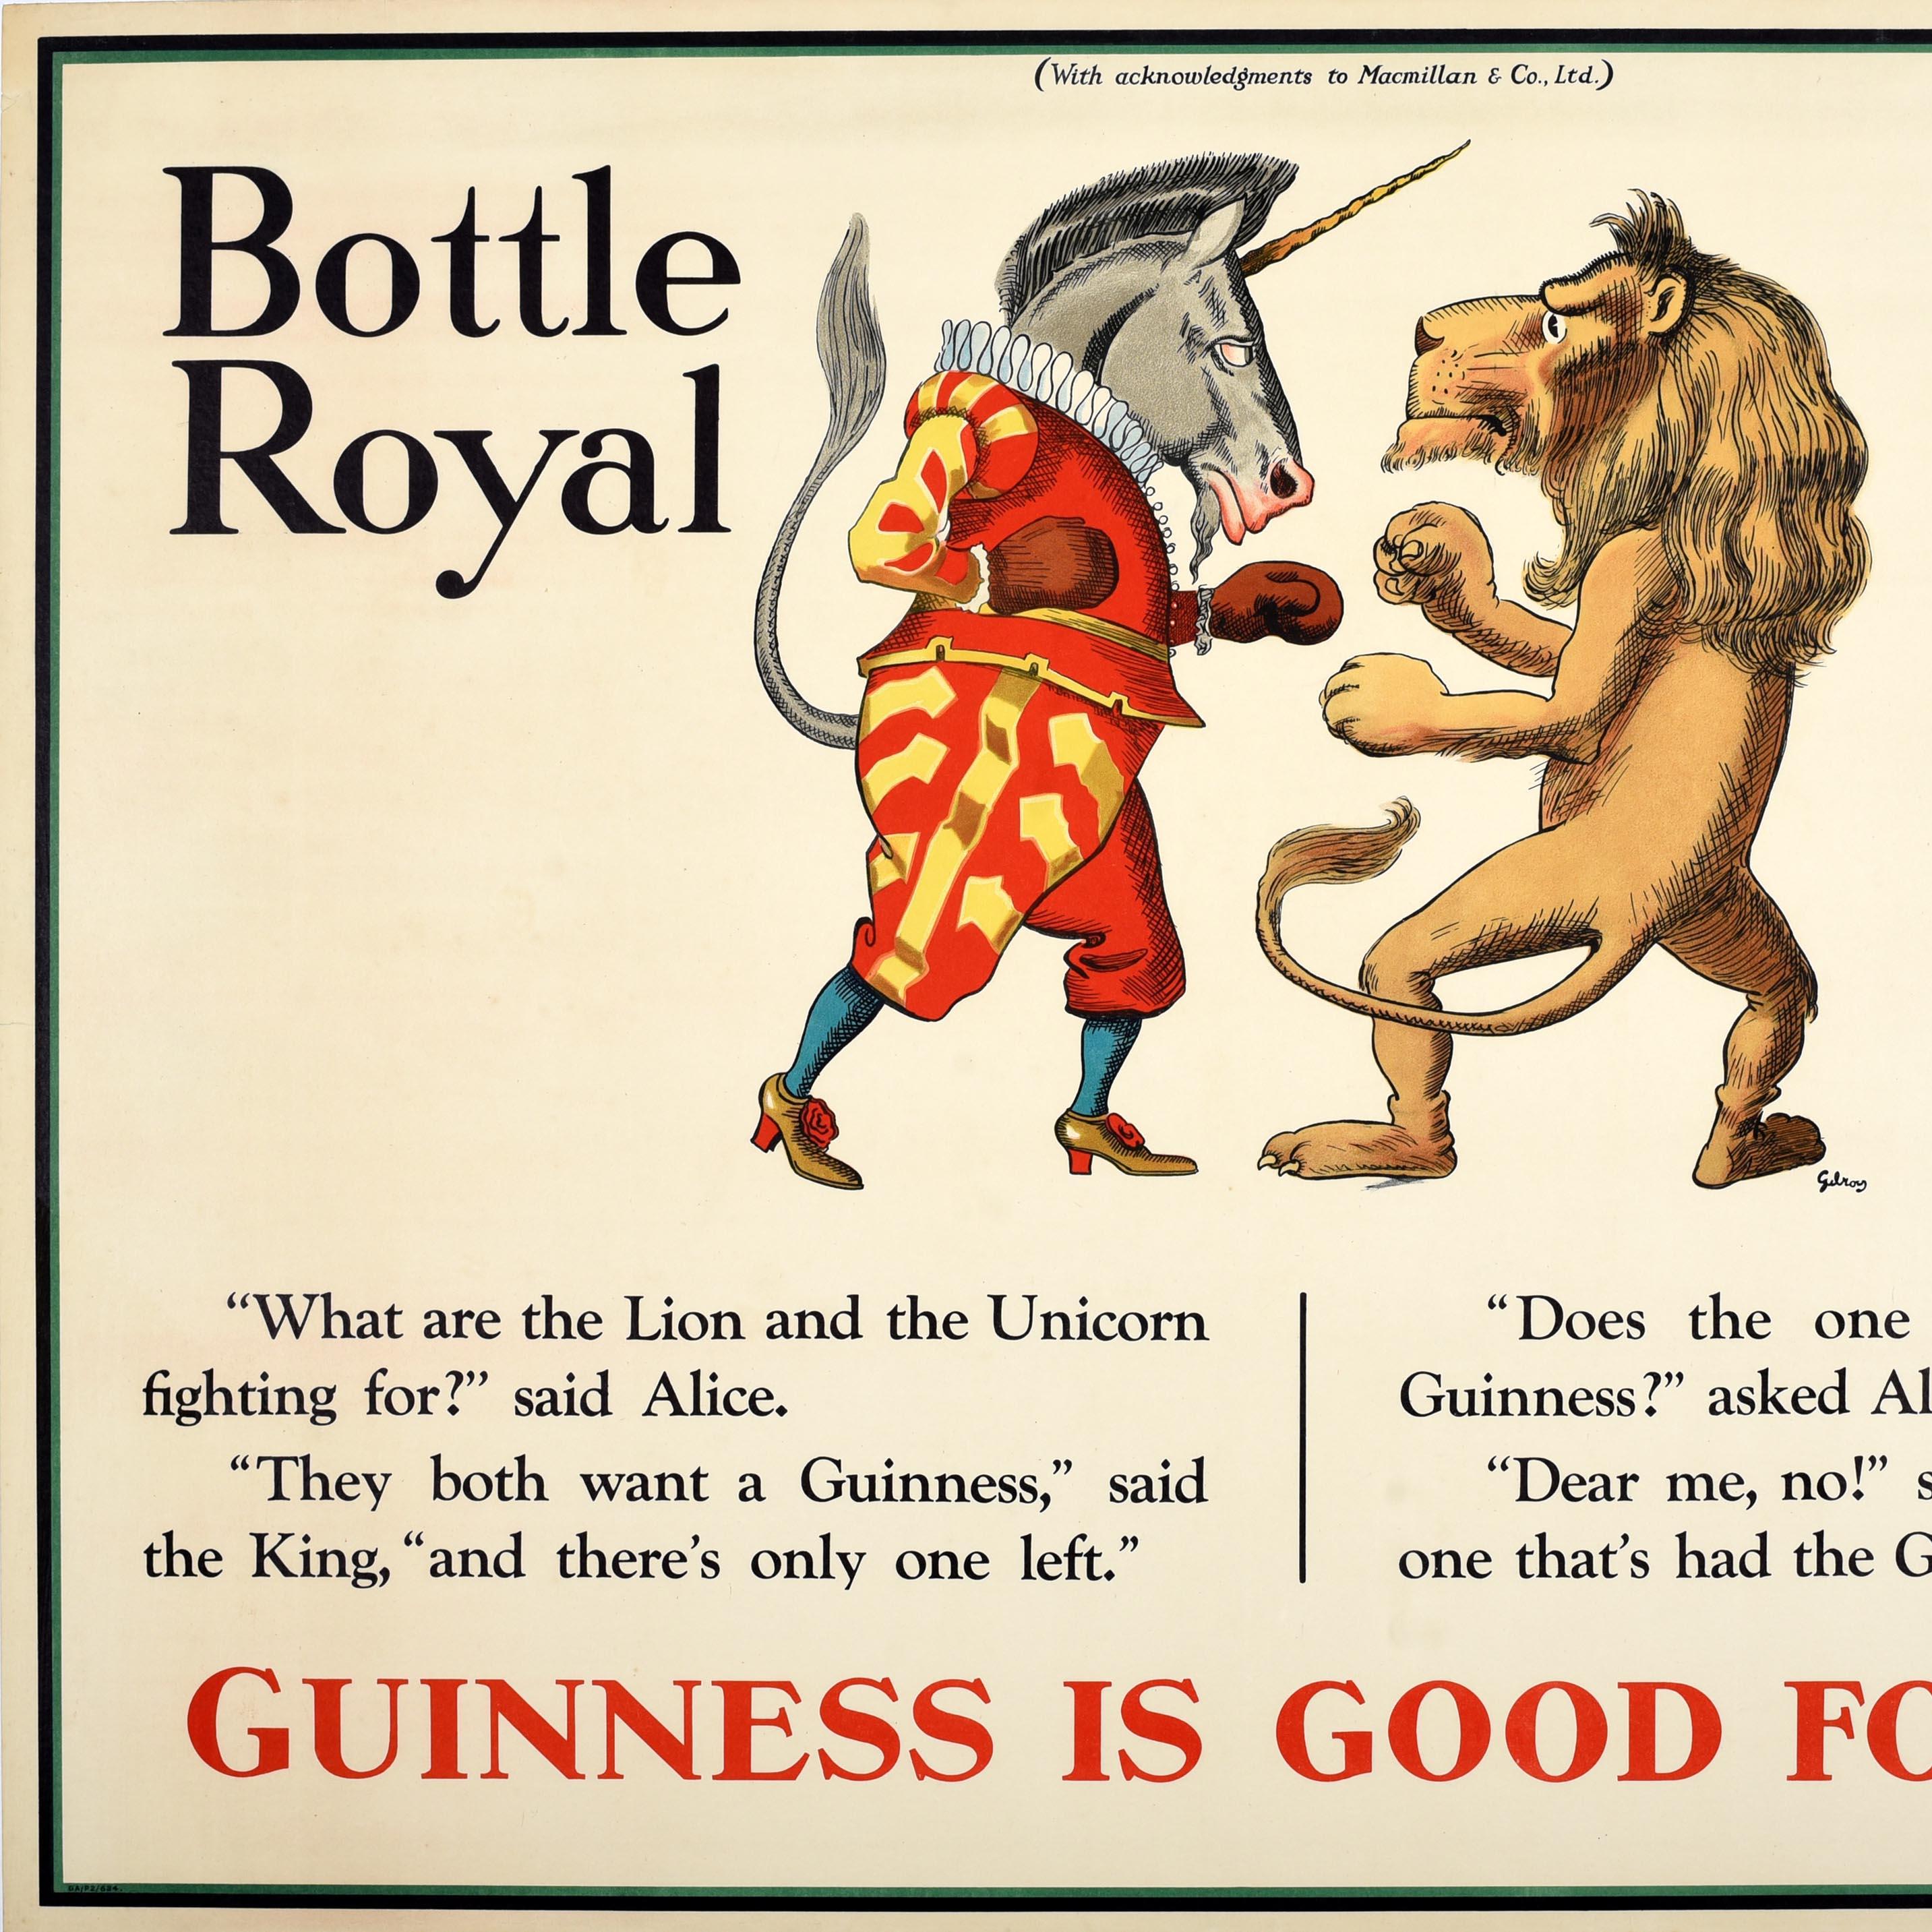 British Rare Original Vintage Advertising Poster Guinness Bottle Royal John Gilroy For Sale